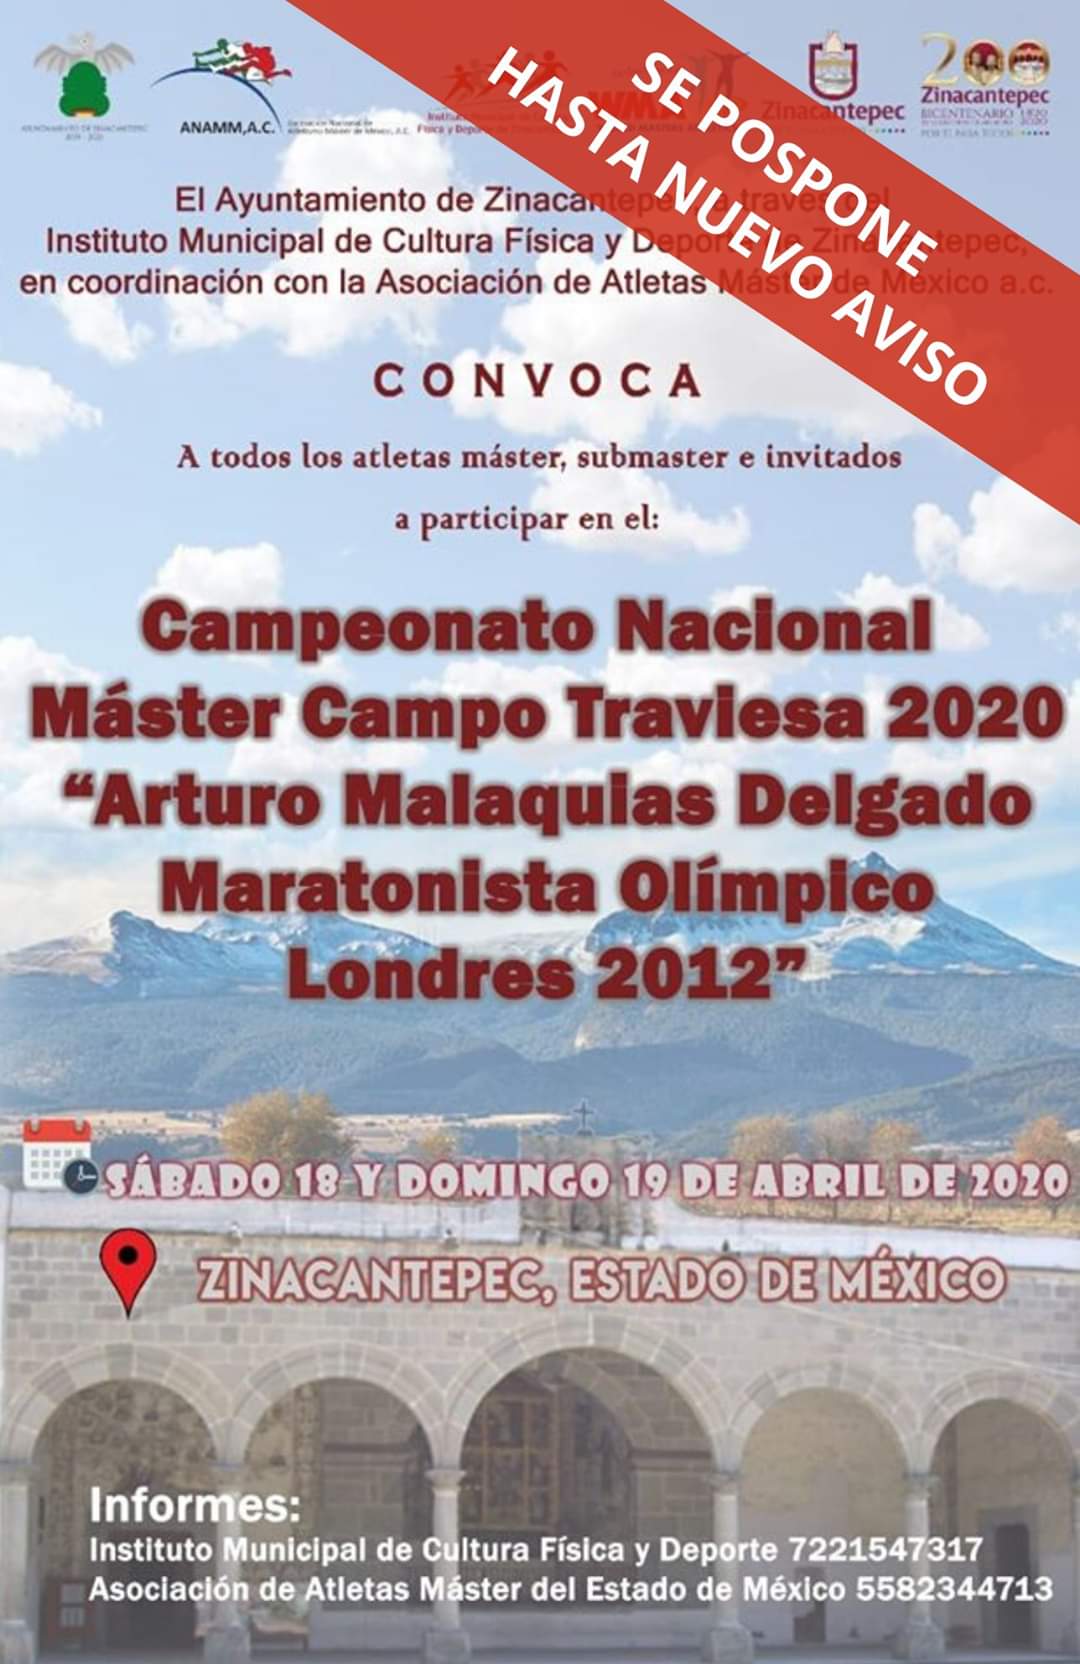 Cancelan campeonato Master Campo Traviesa 2020 en Zinacantepec